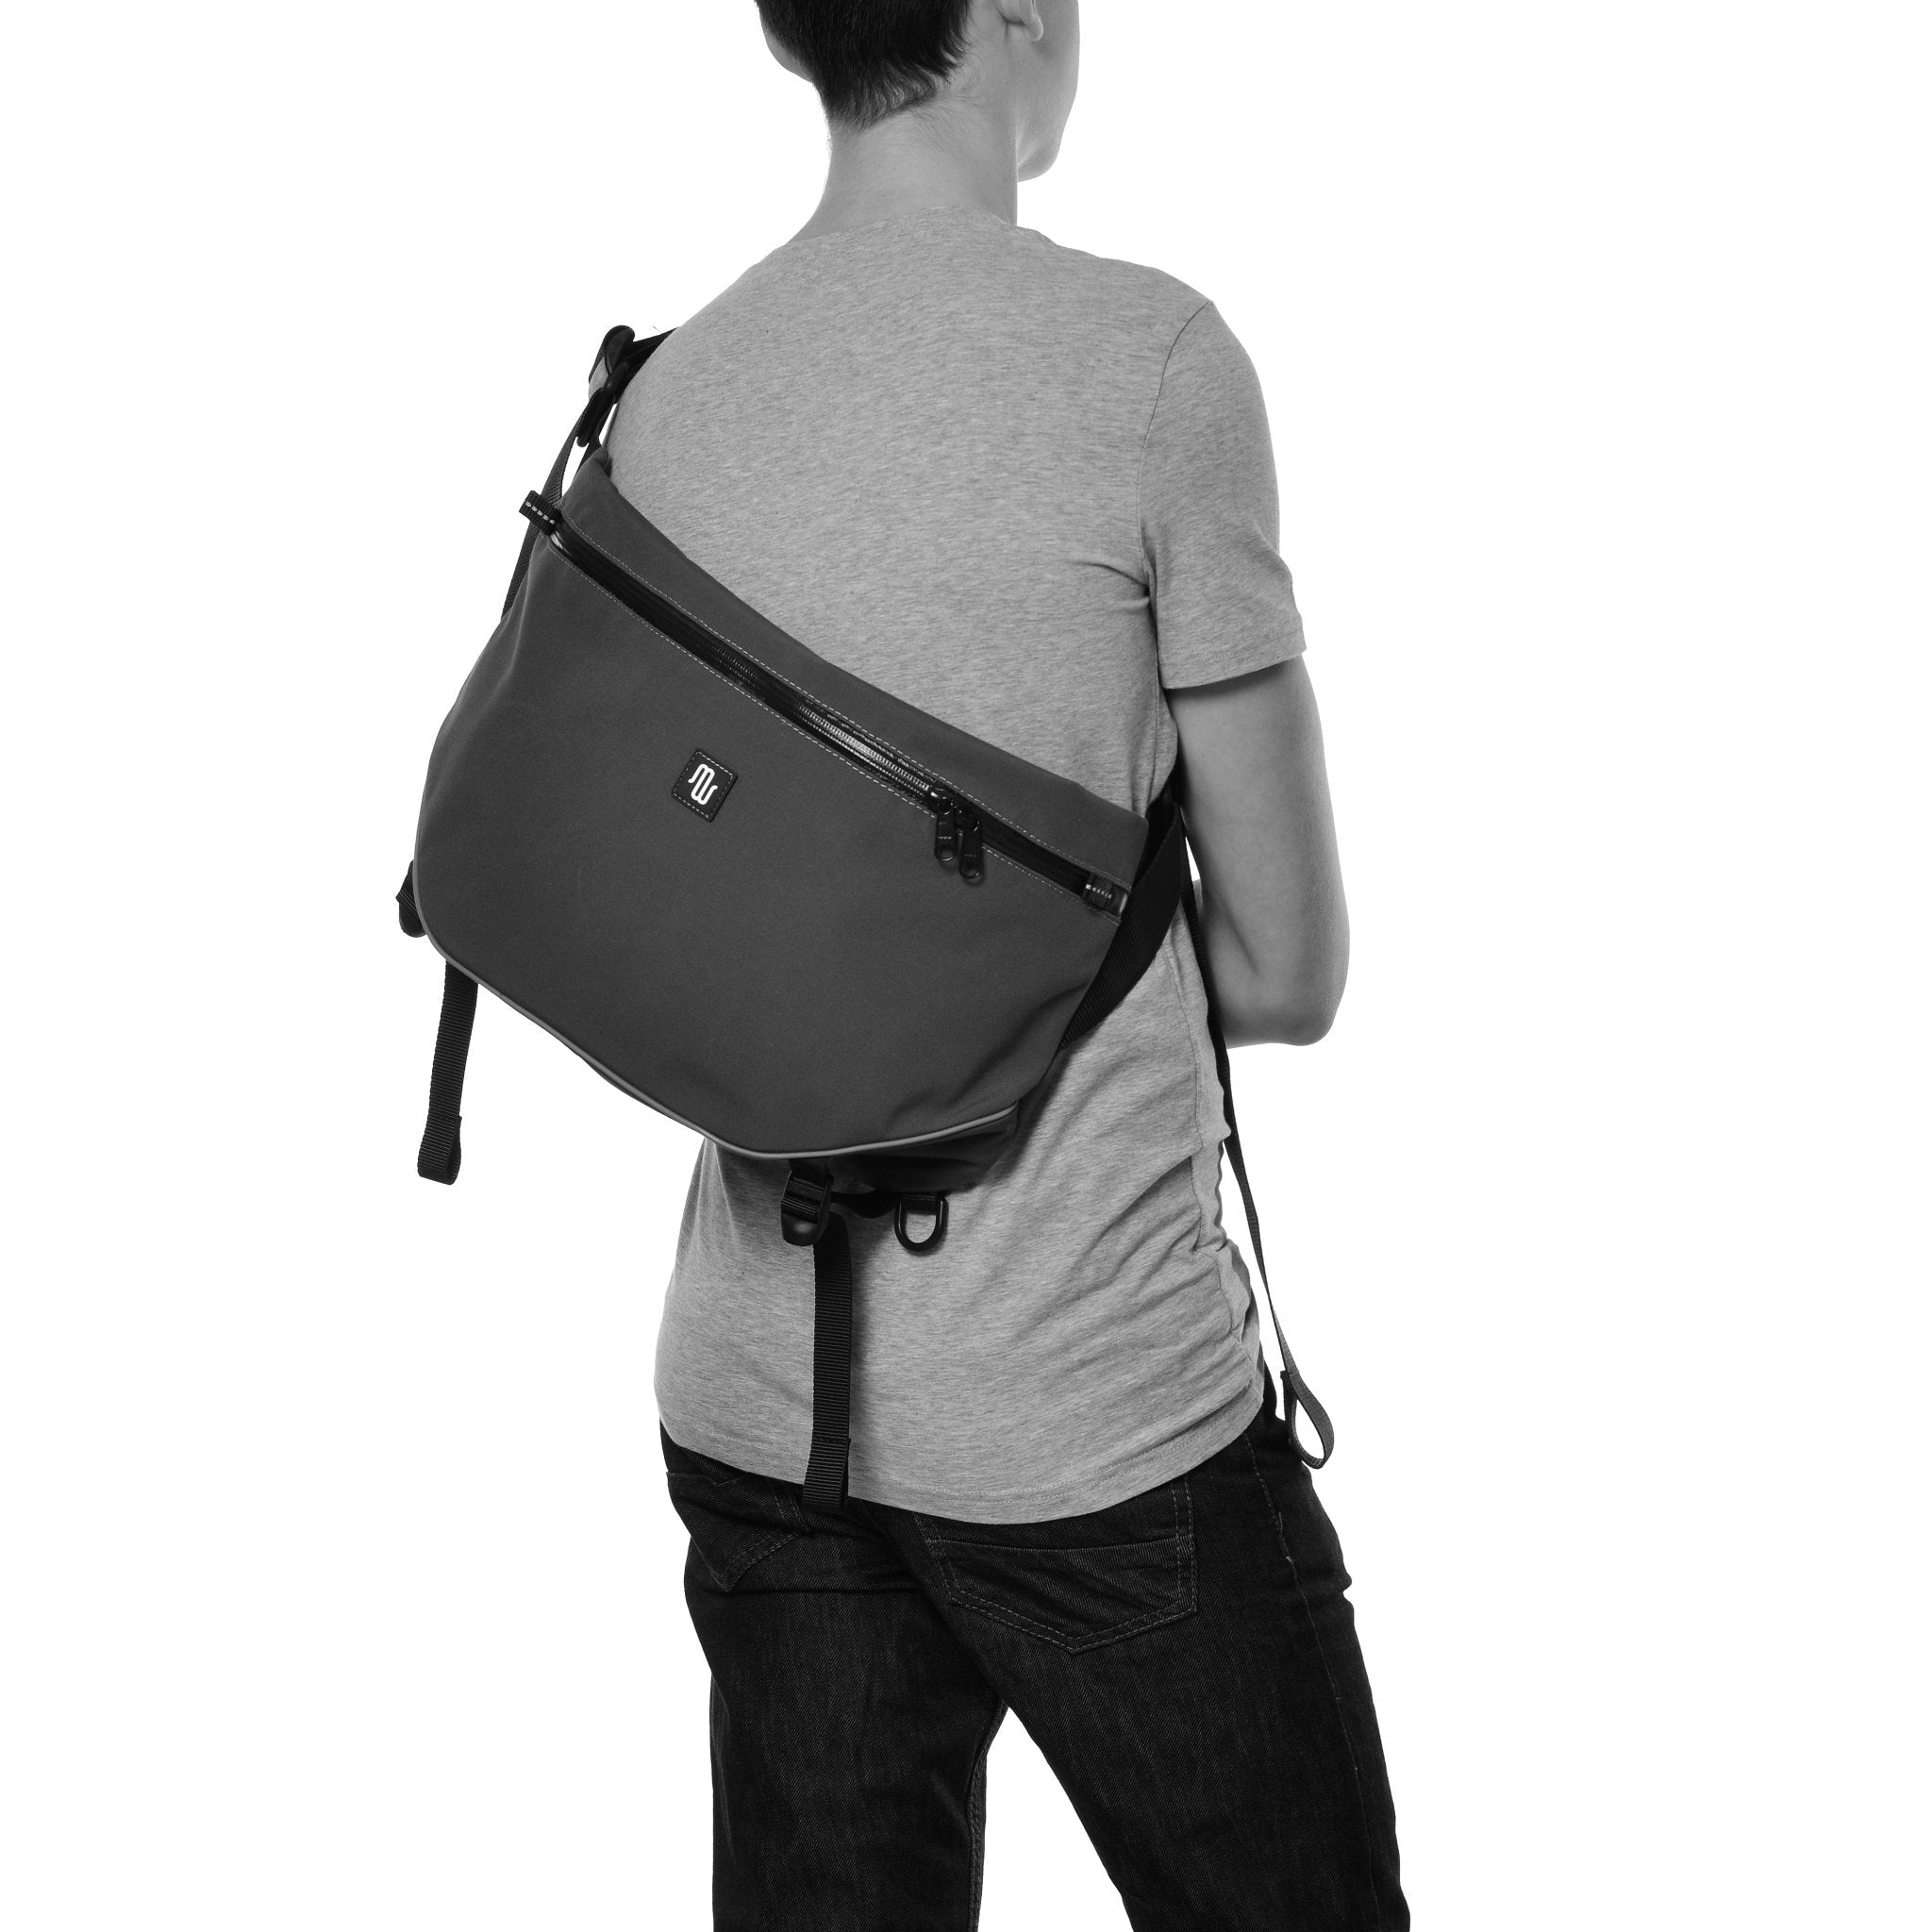 Crossbody Bag - BOB No. 046 - Shoulder bag - medencebag